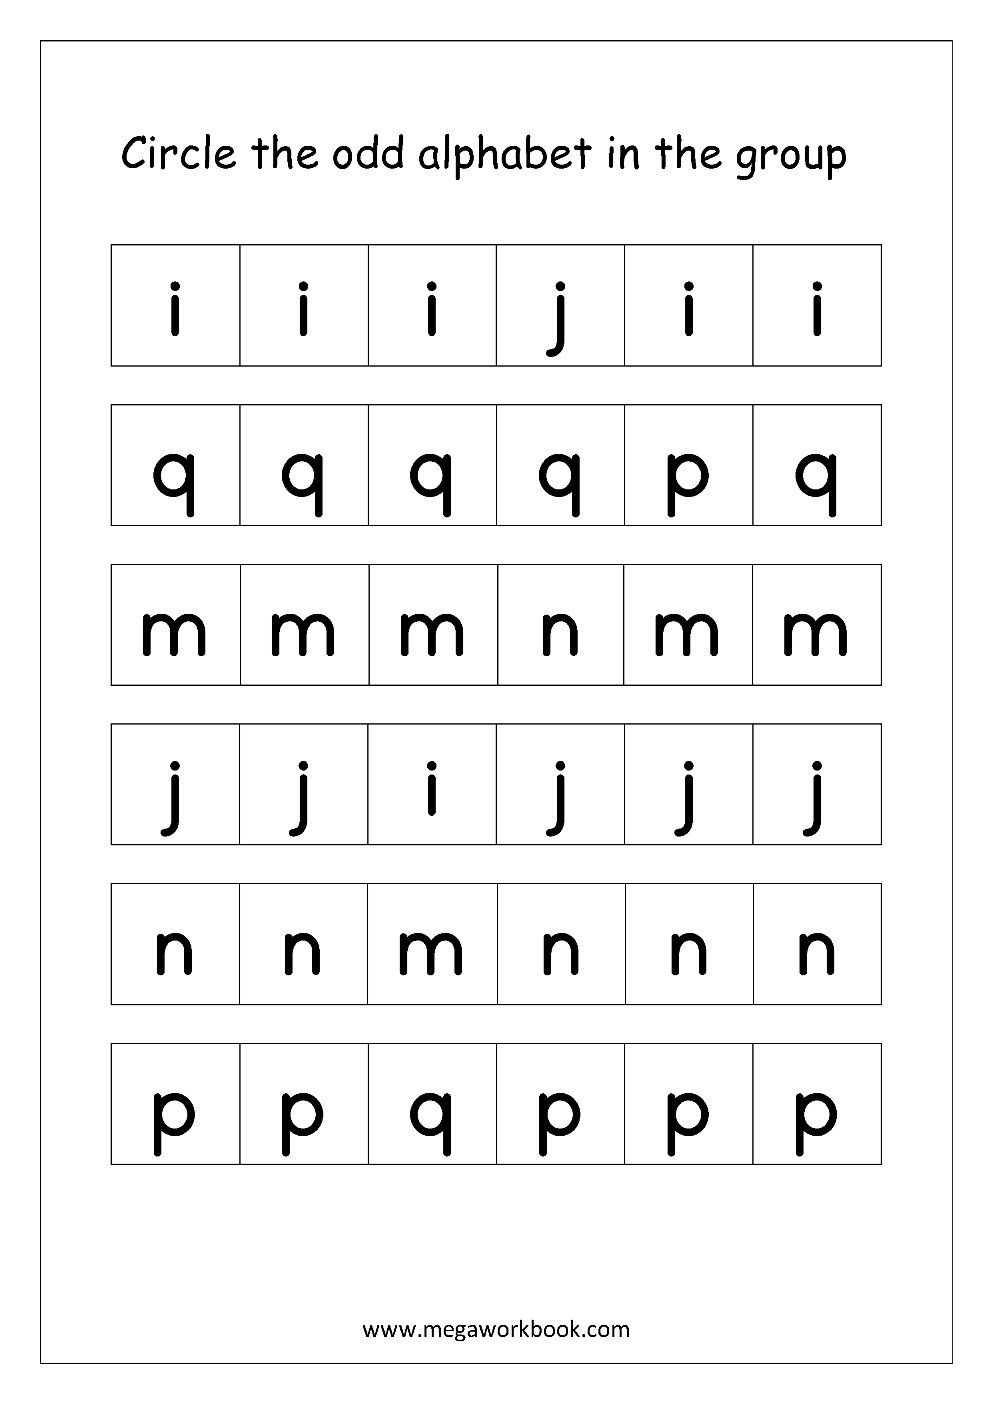 free-english-worksheets-confusing-alphabets-megaworkbook